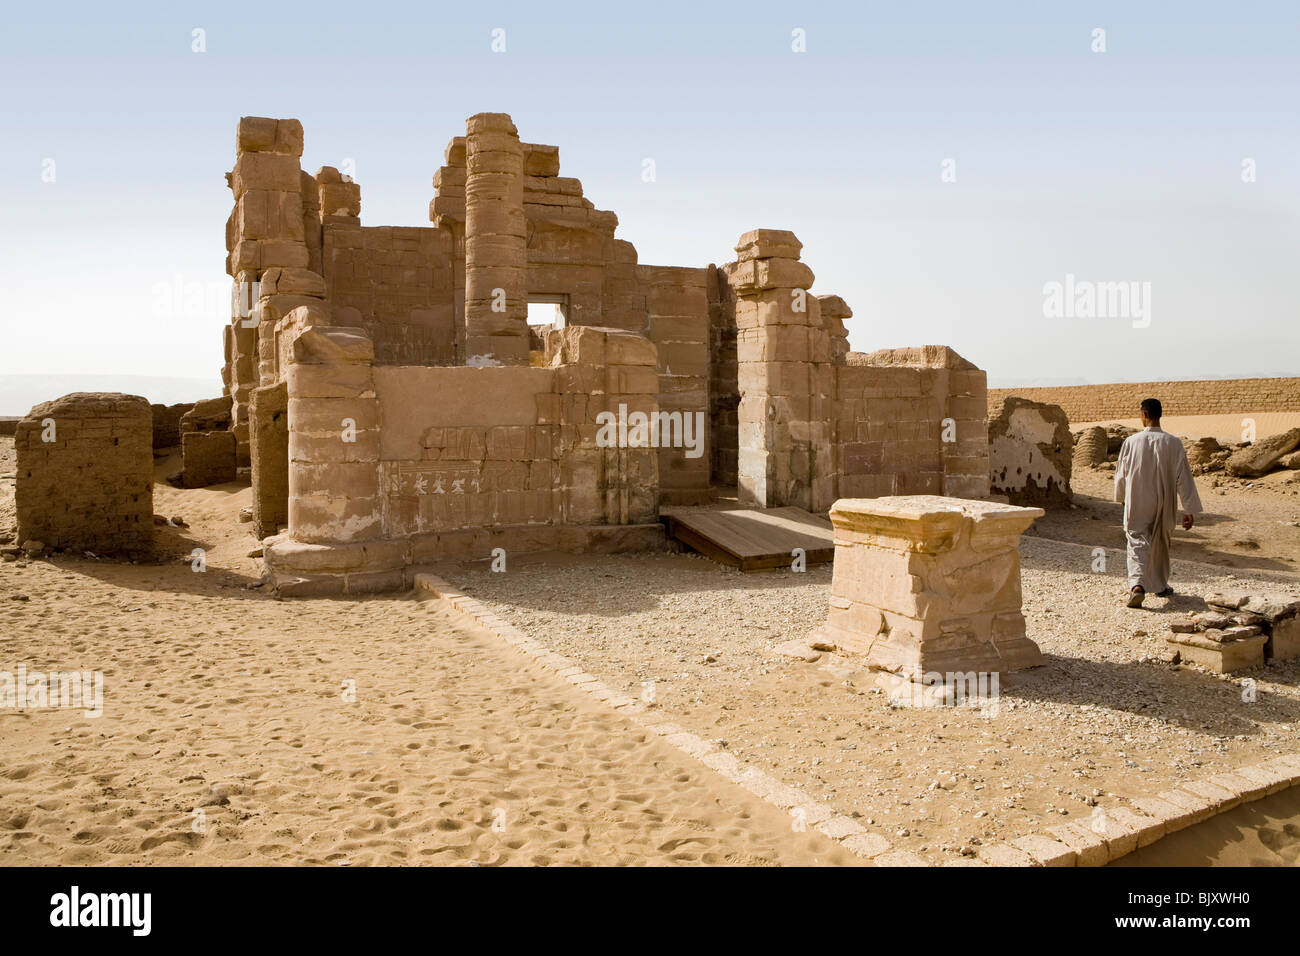 The Roman Temple of Deir el Hagar, Monastery of Stone, Dakhla Oasis, Western Desert of Egypt Stock Photo